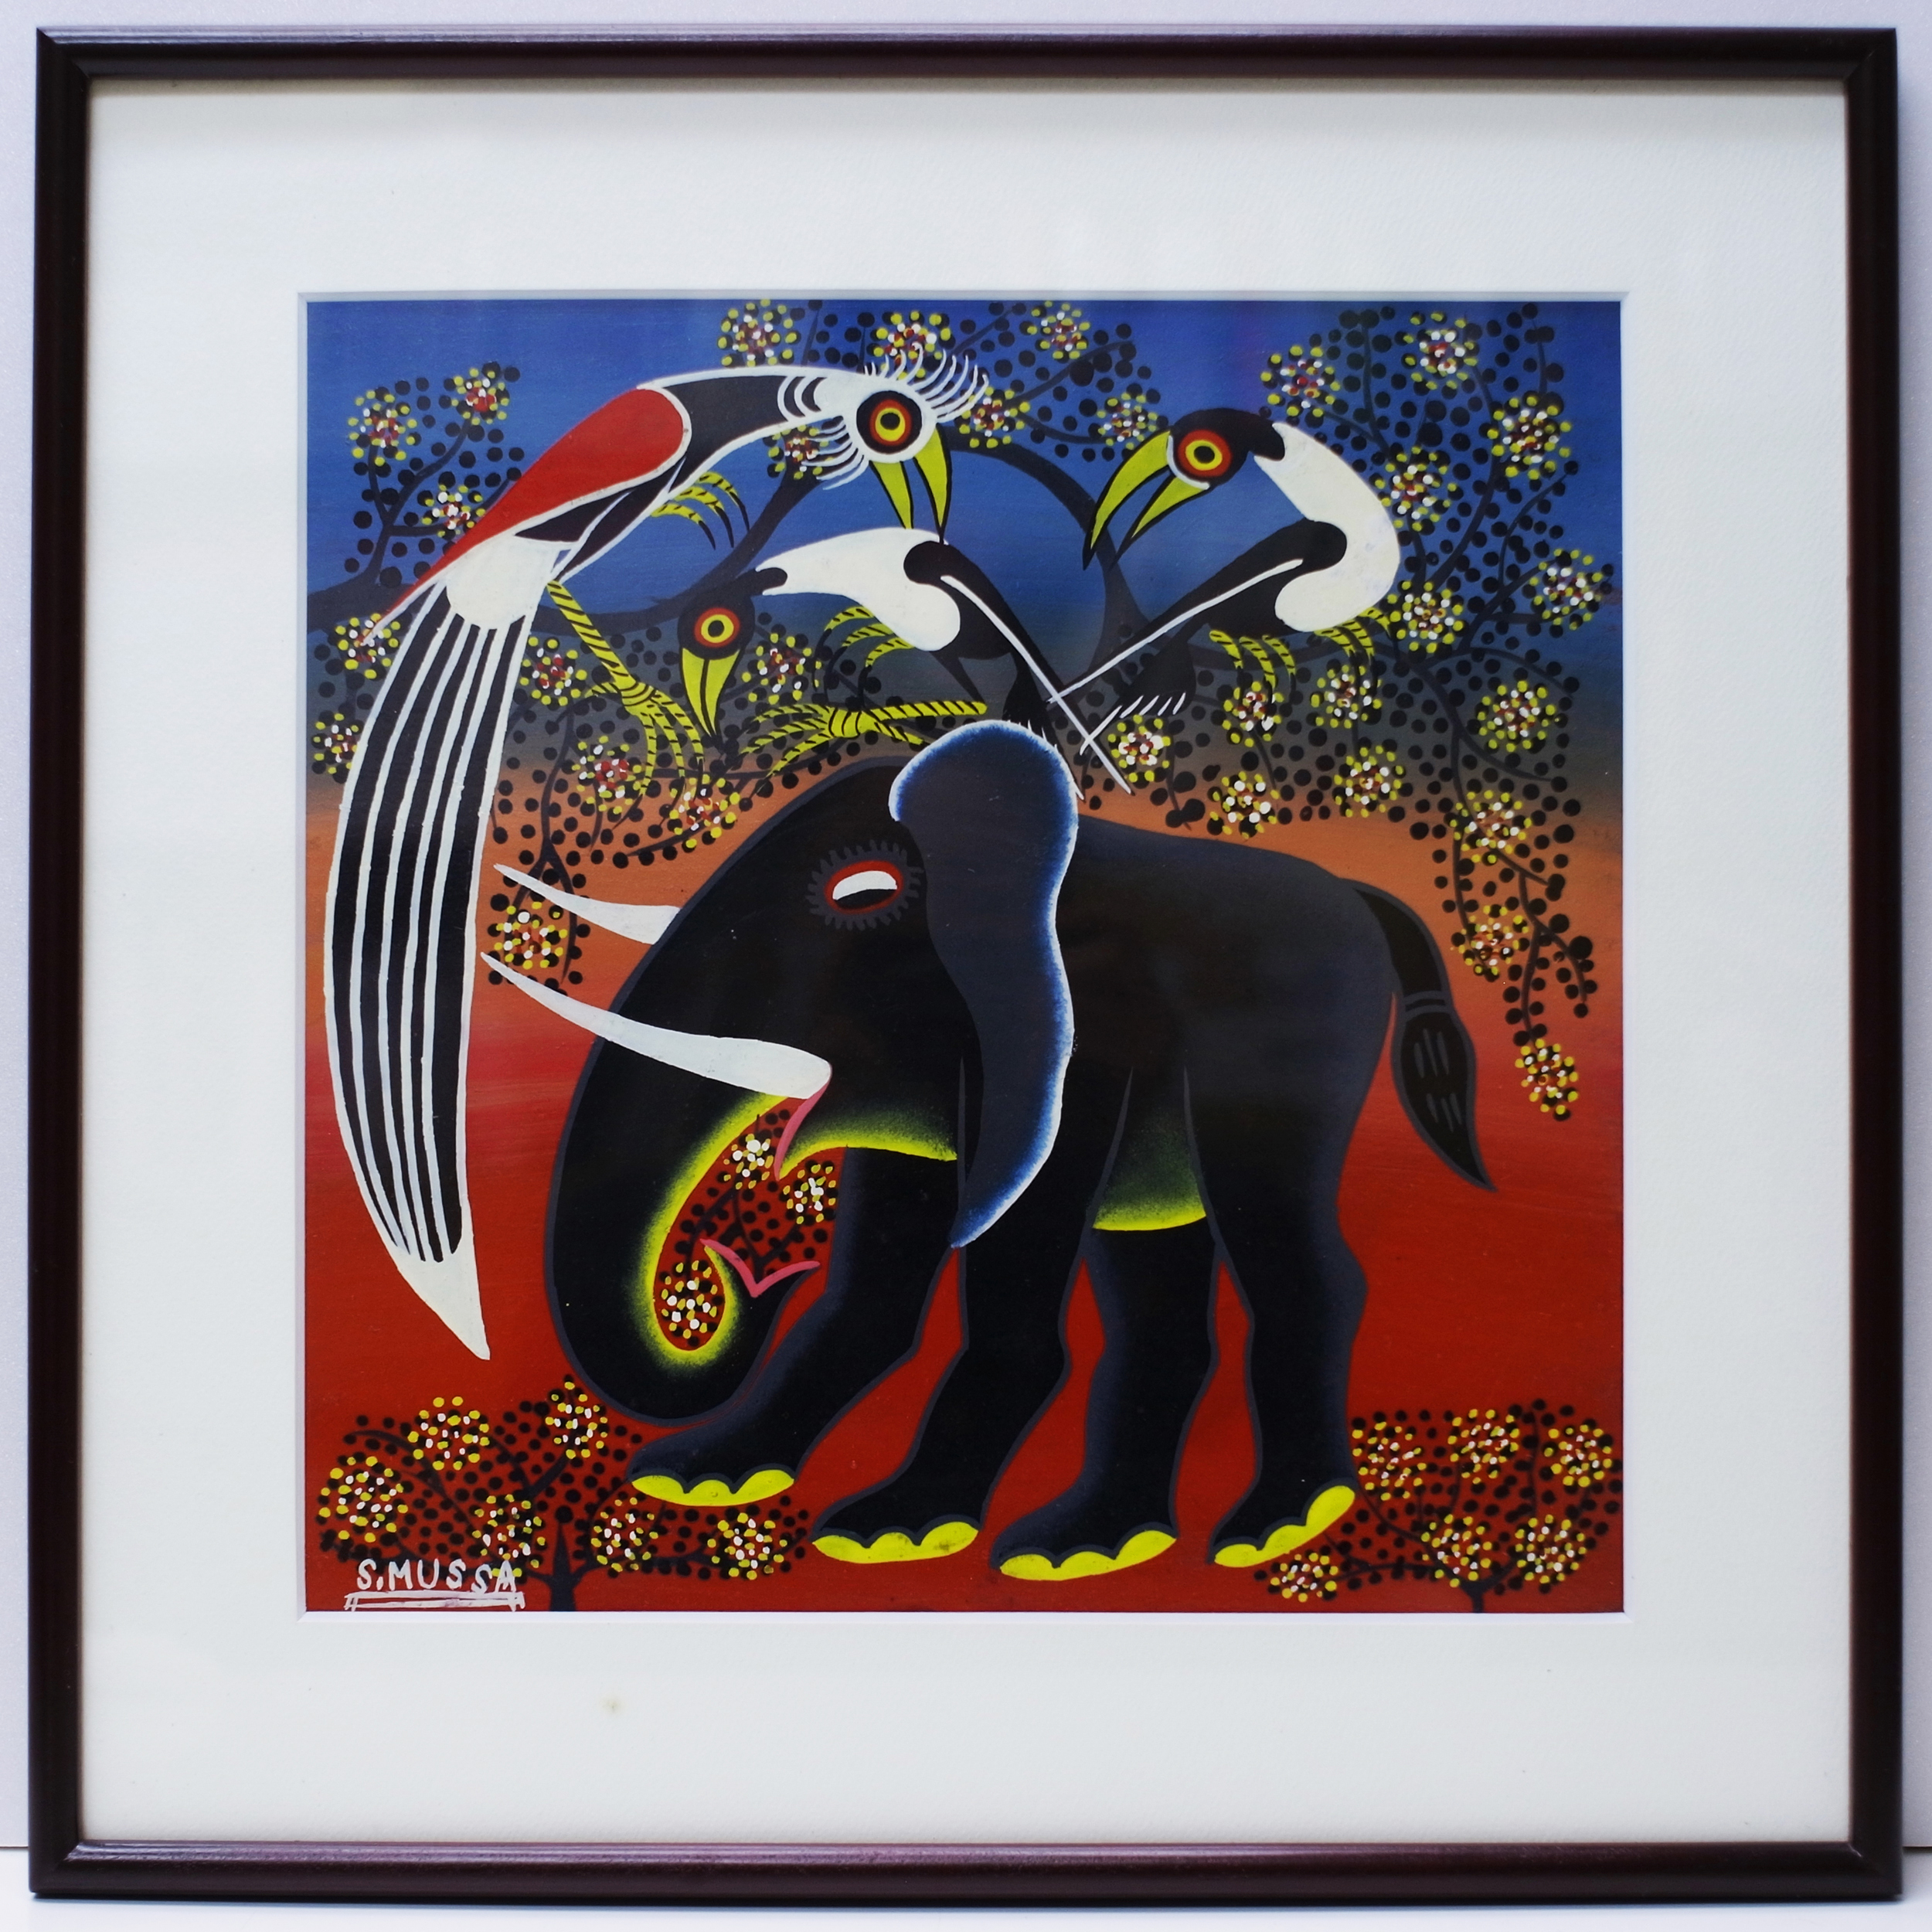 SALUM MUSSA - Elephant (300~300 Framed)